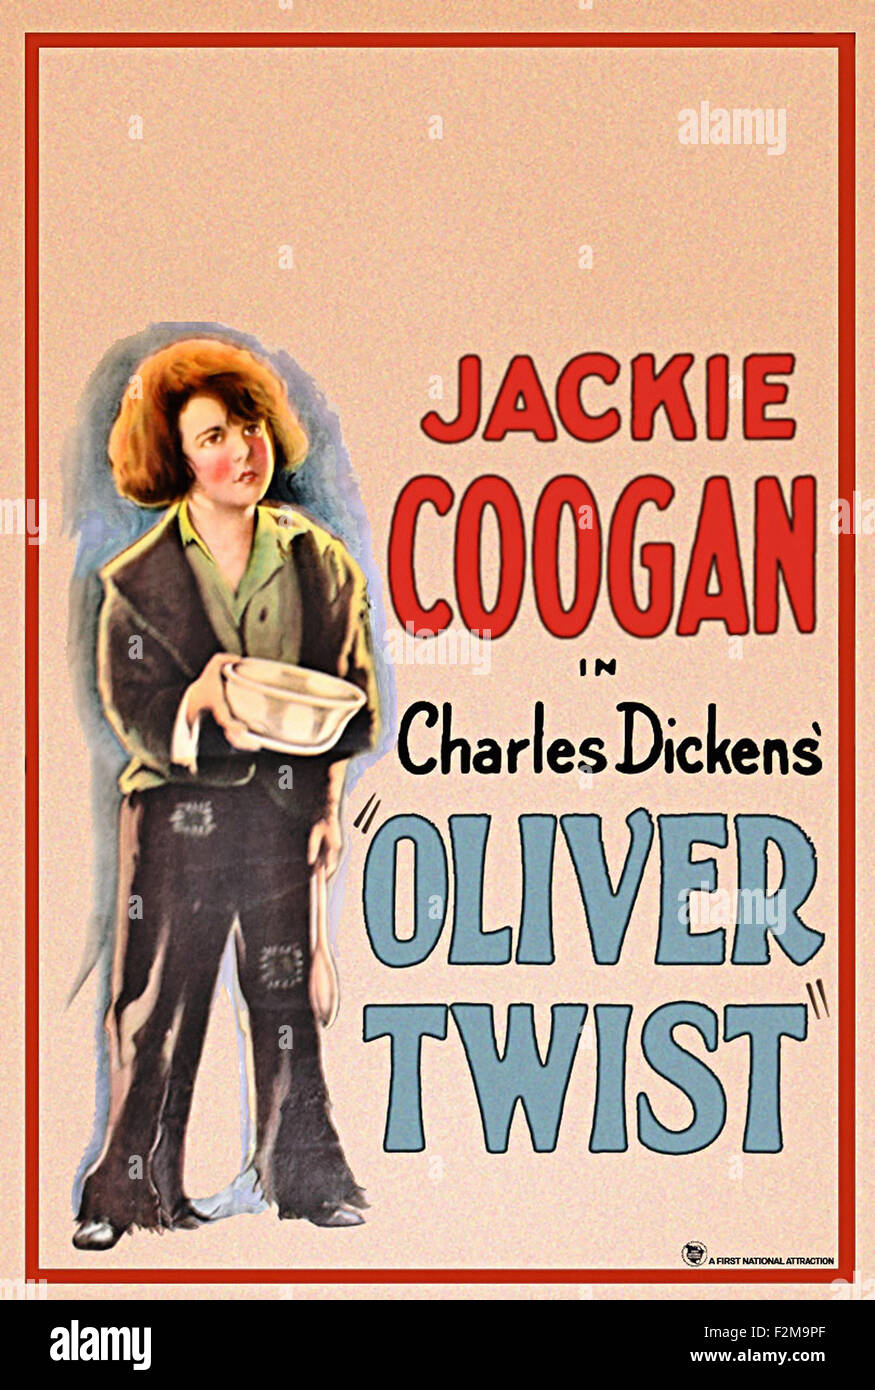 Oliver Twist (1922) - Movie Poster Stock Photo